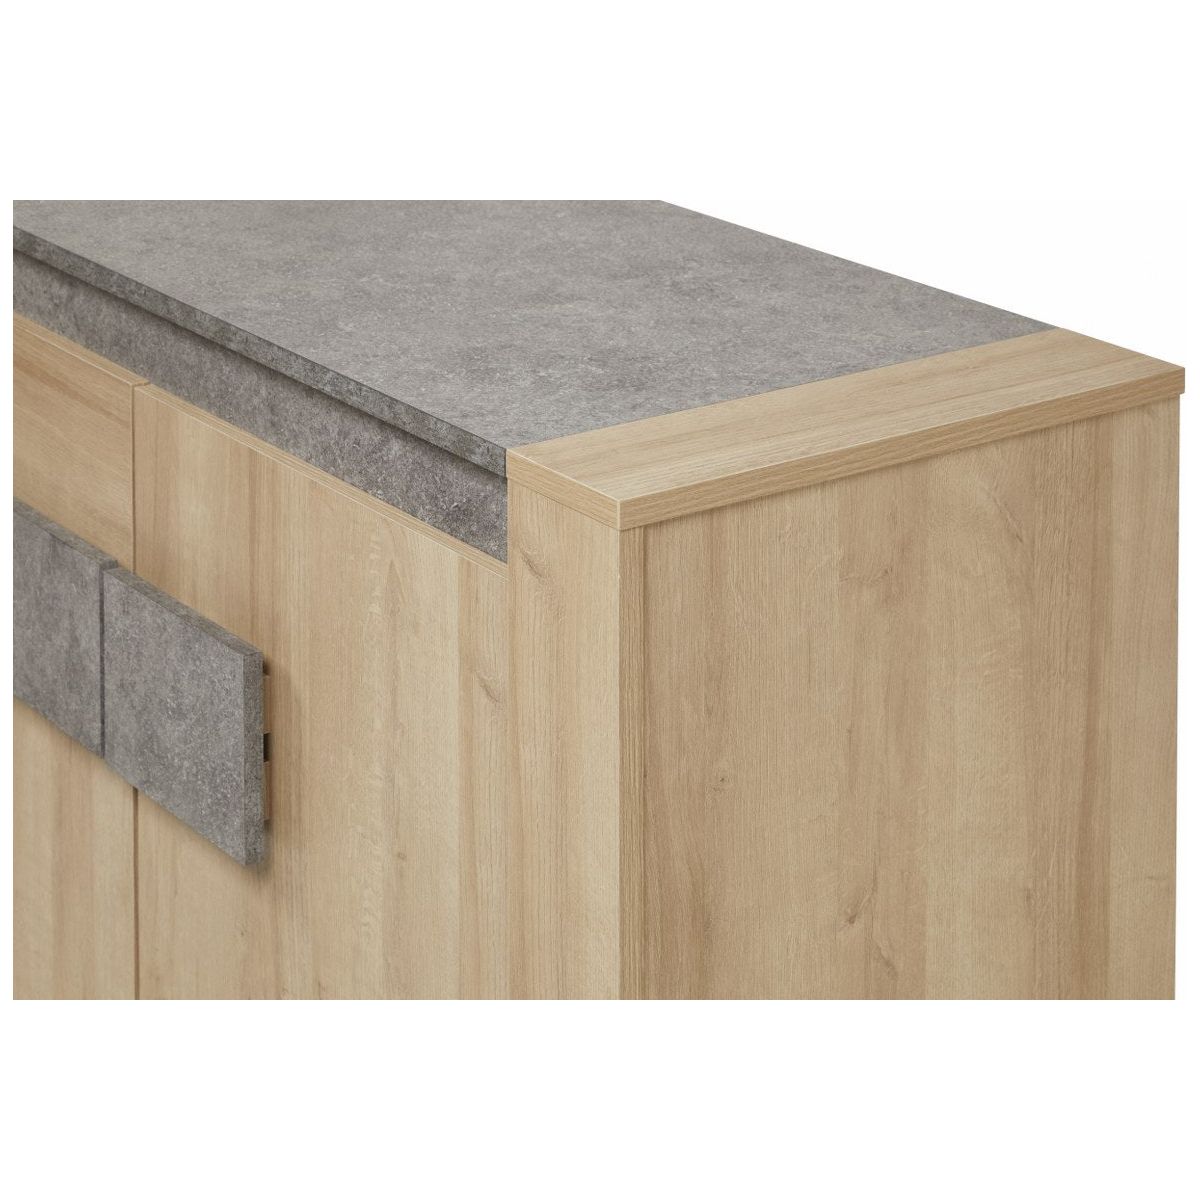 Dresser | Furniture series Ariya | brown, natural, light gray |